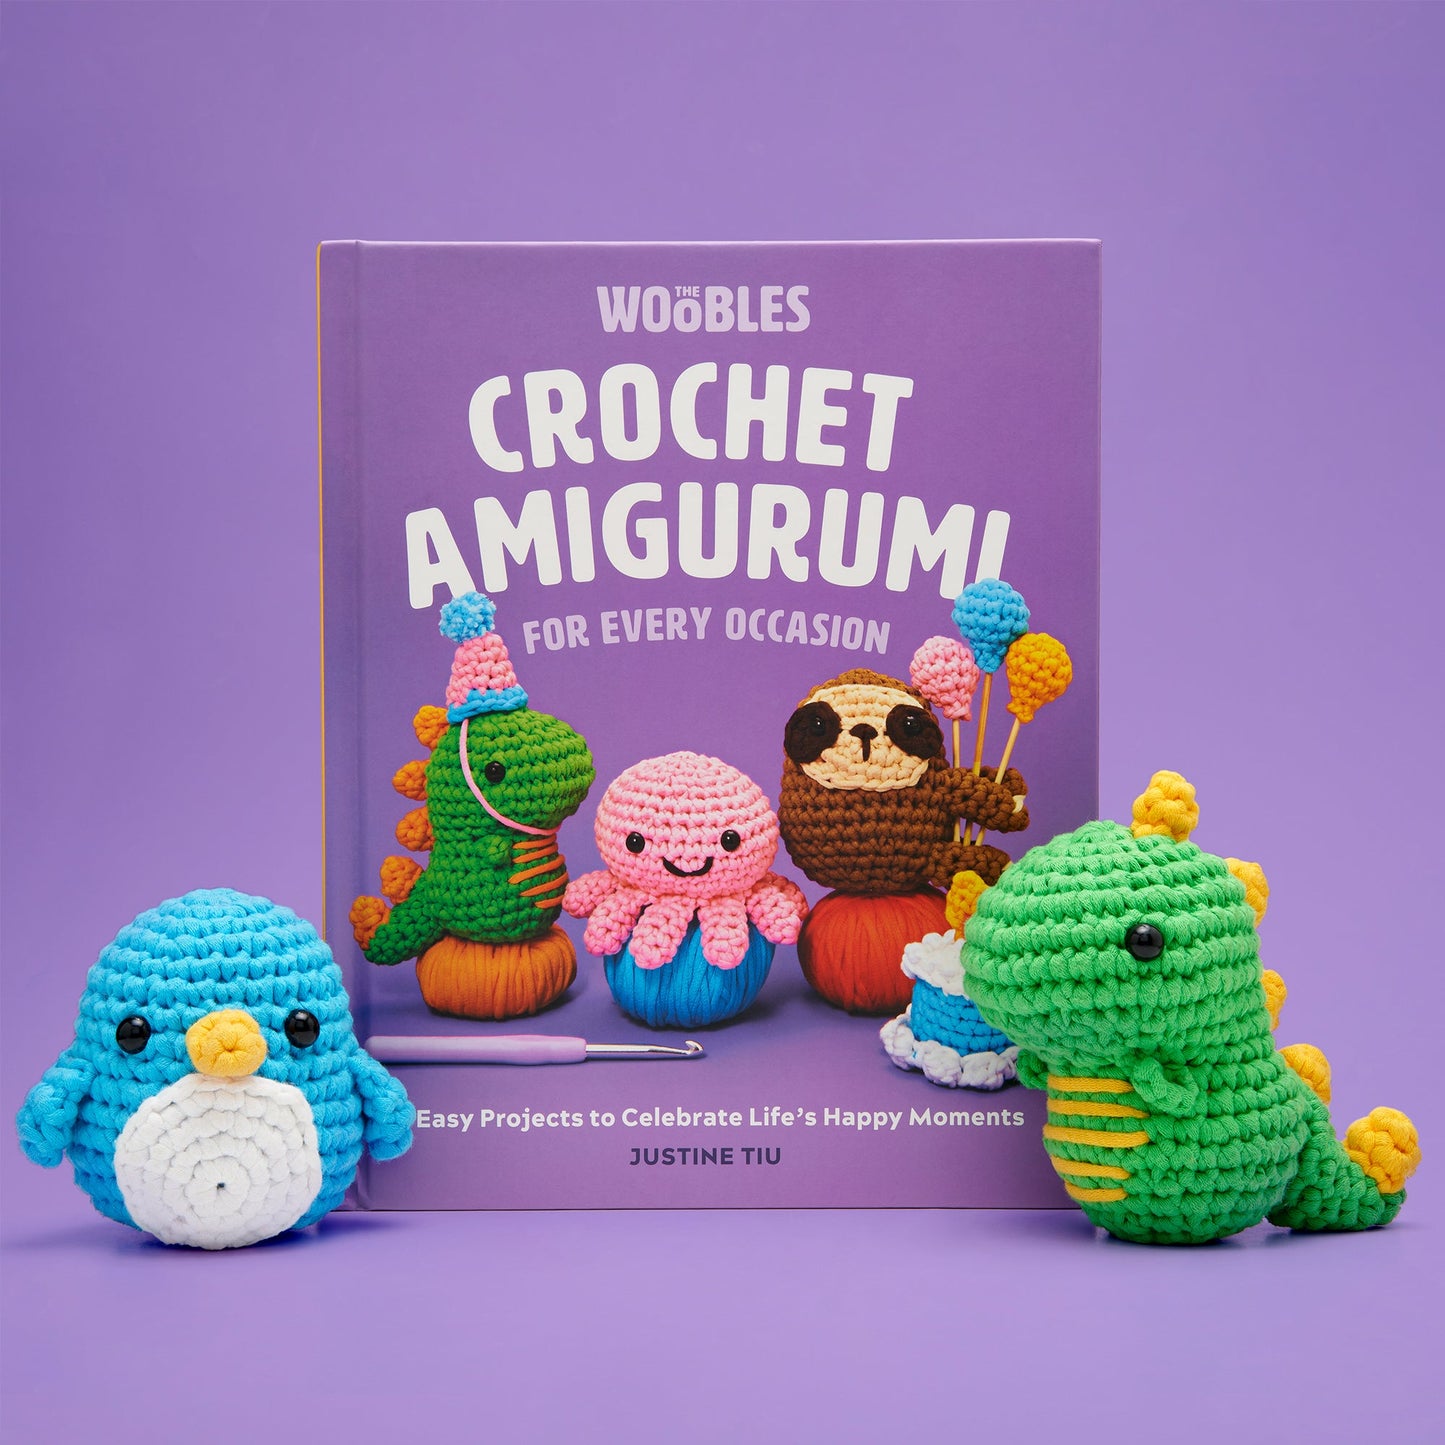 The Woobles Crochet Amigurumi Book